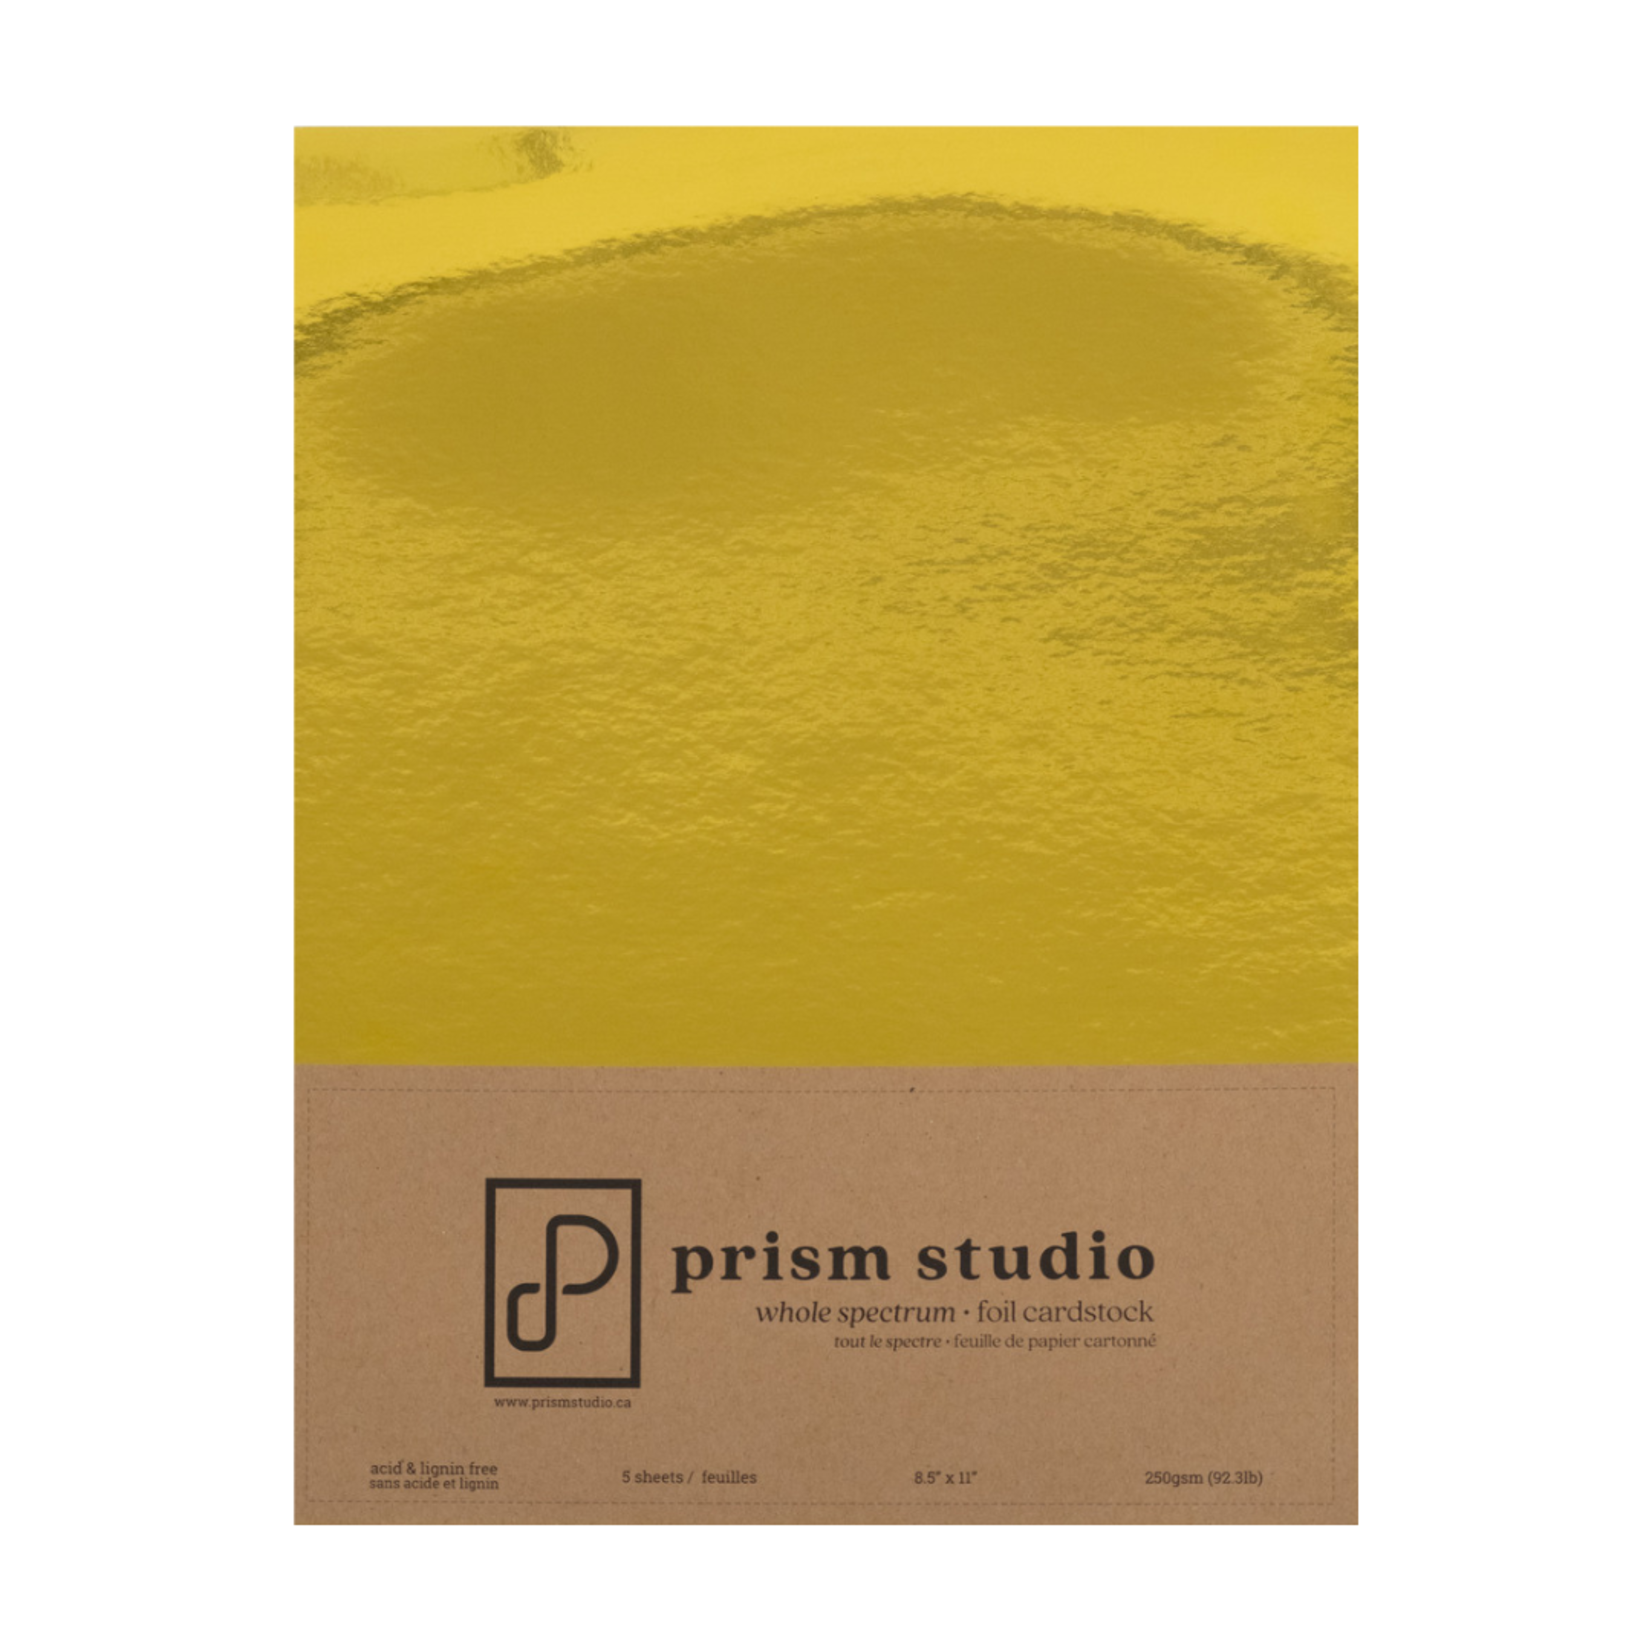 PRISM STUDIO PRISM STUDIO WHOLE SPECTRUM FOIL CARDSTOCK 8.5X11 PHARAOH